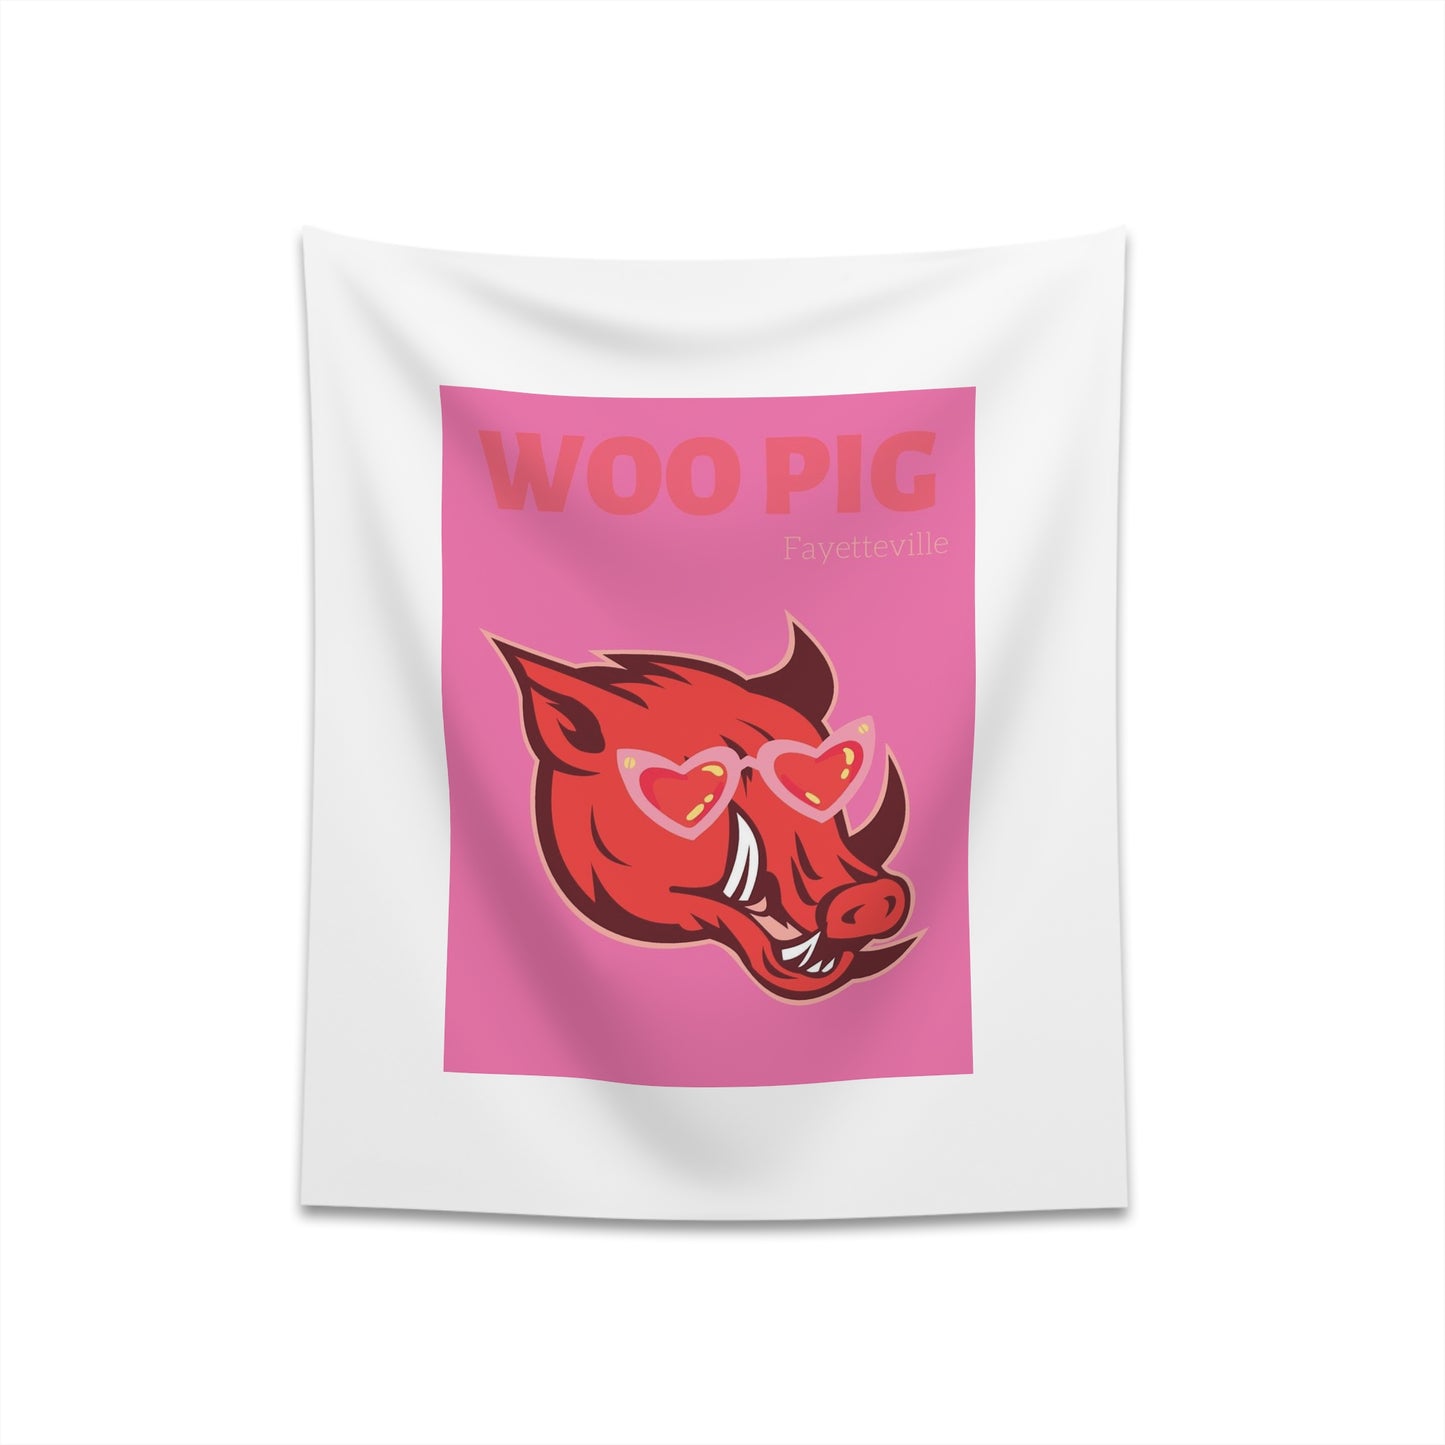 "WOO PIG" Printed Wall Tapestry